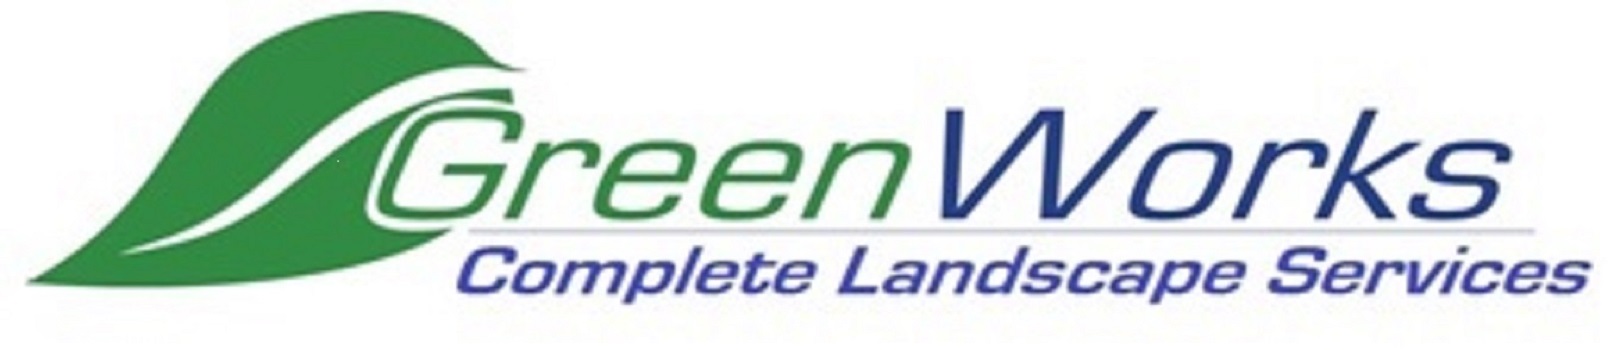 Greenworks Landscaping and Irrigation Logo